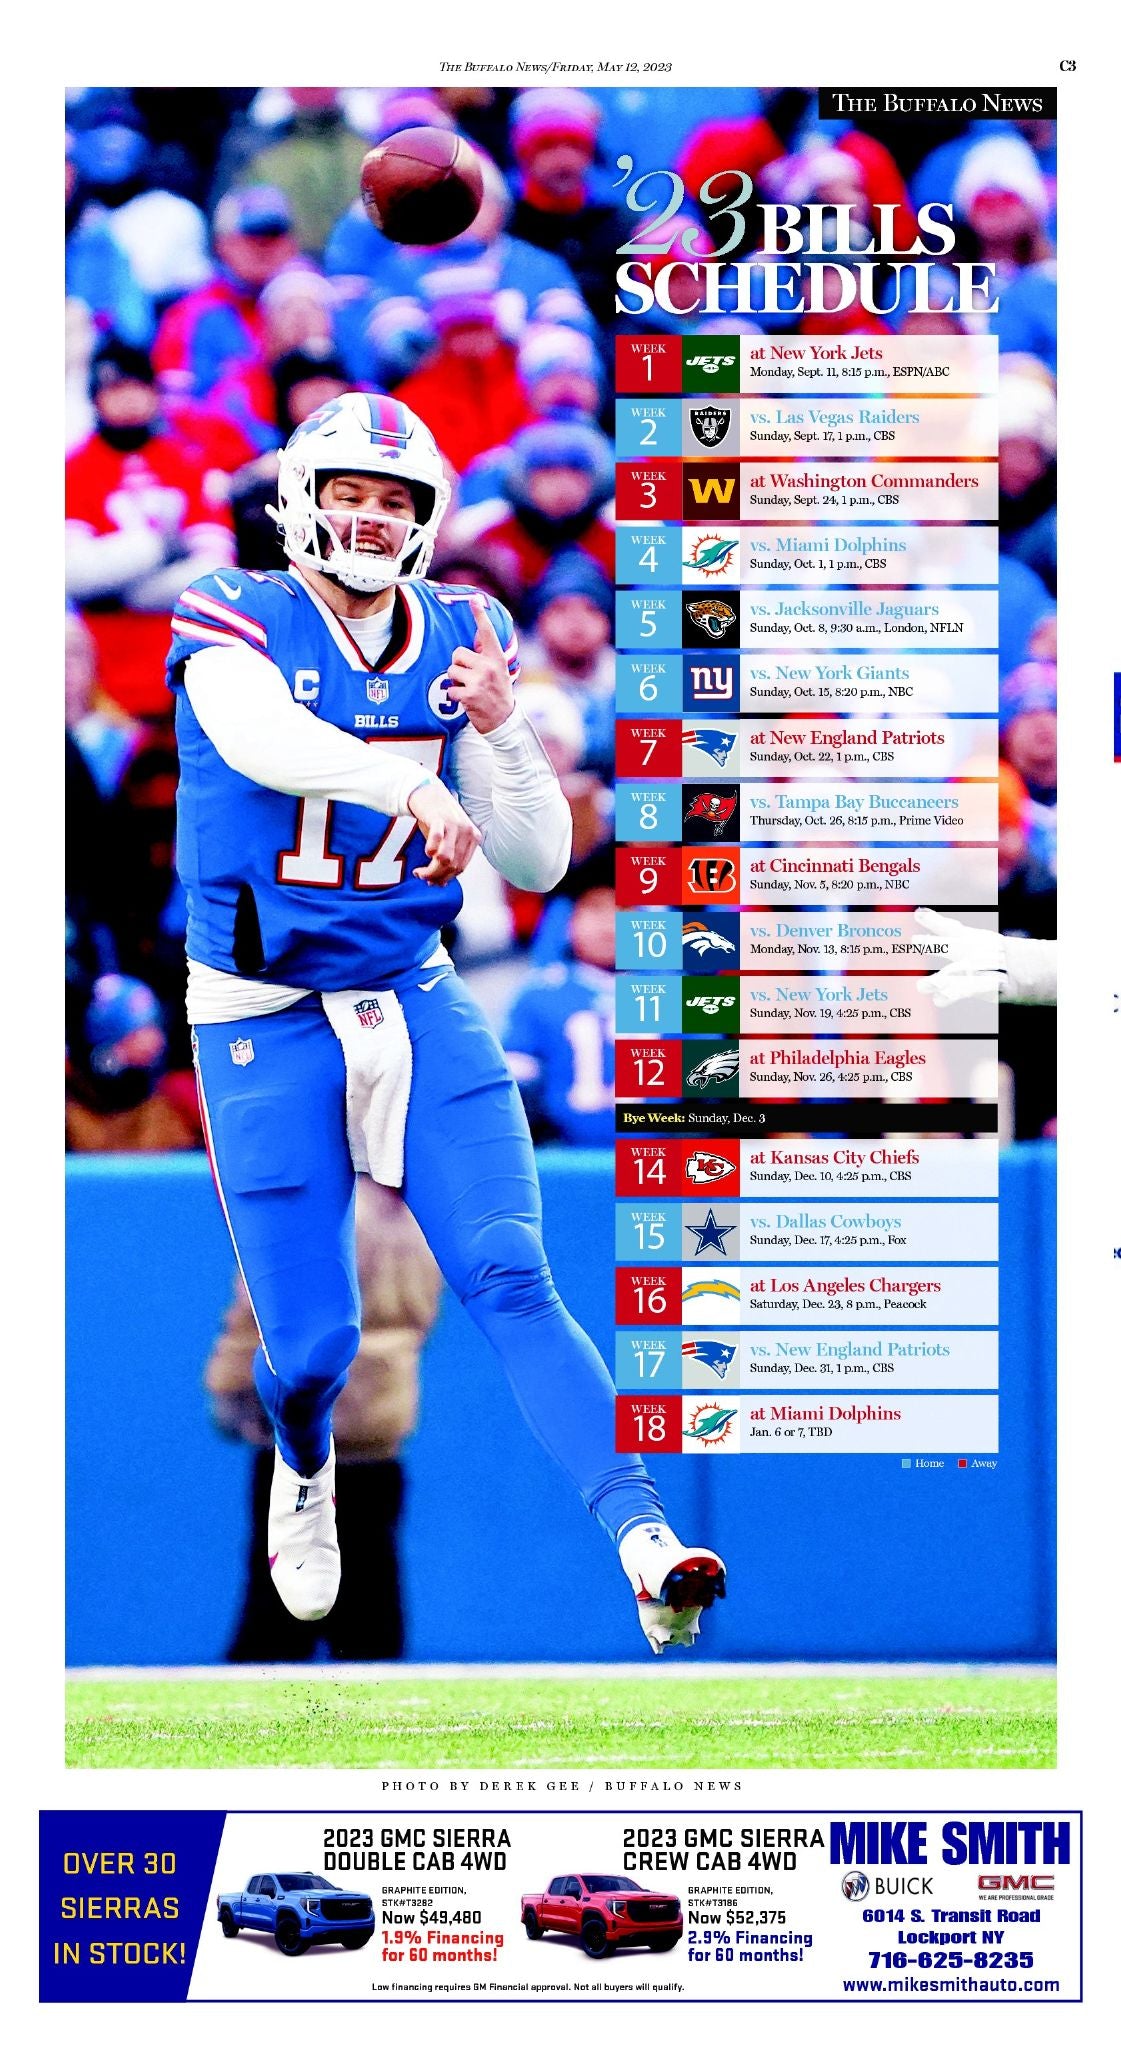 2023 / 2024 Buffalo Bills Season Schedule